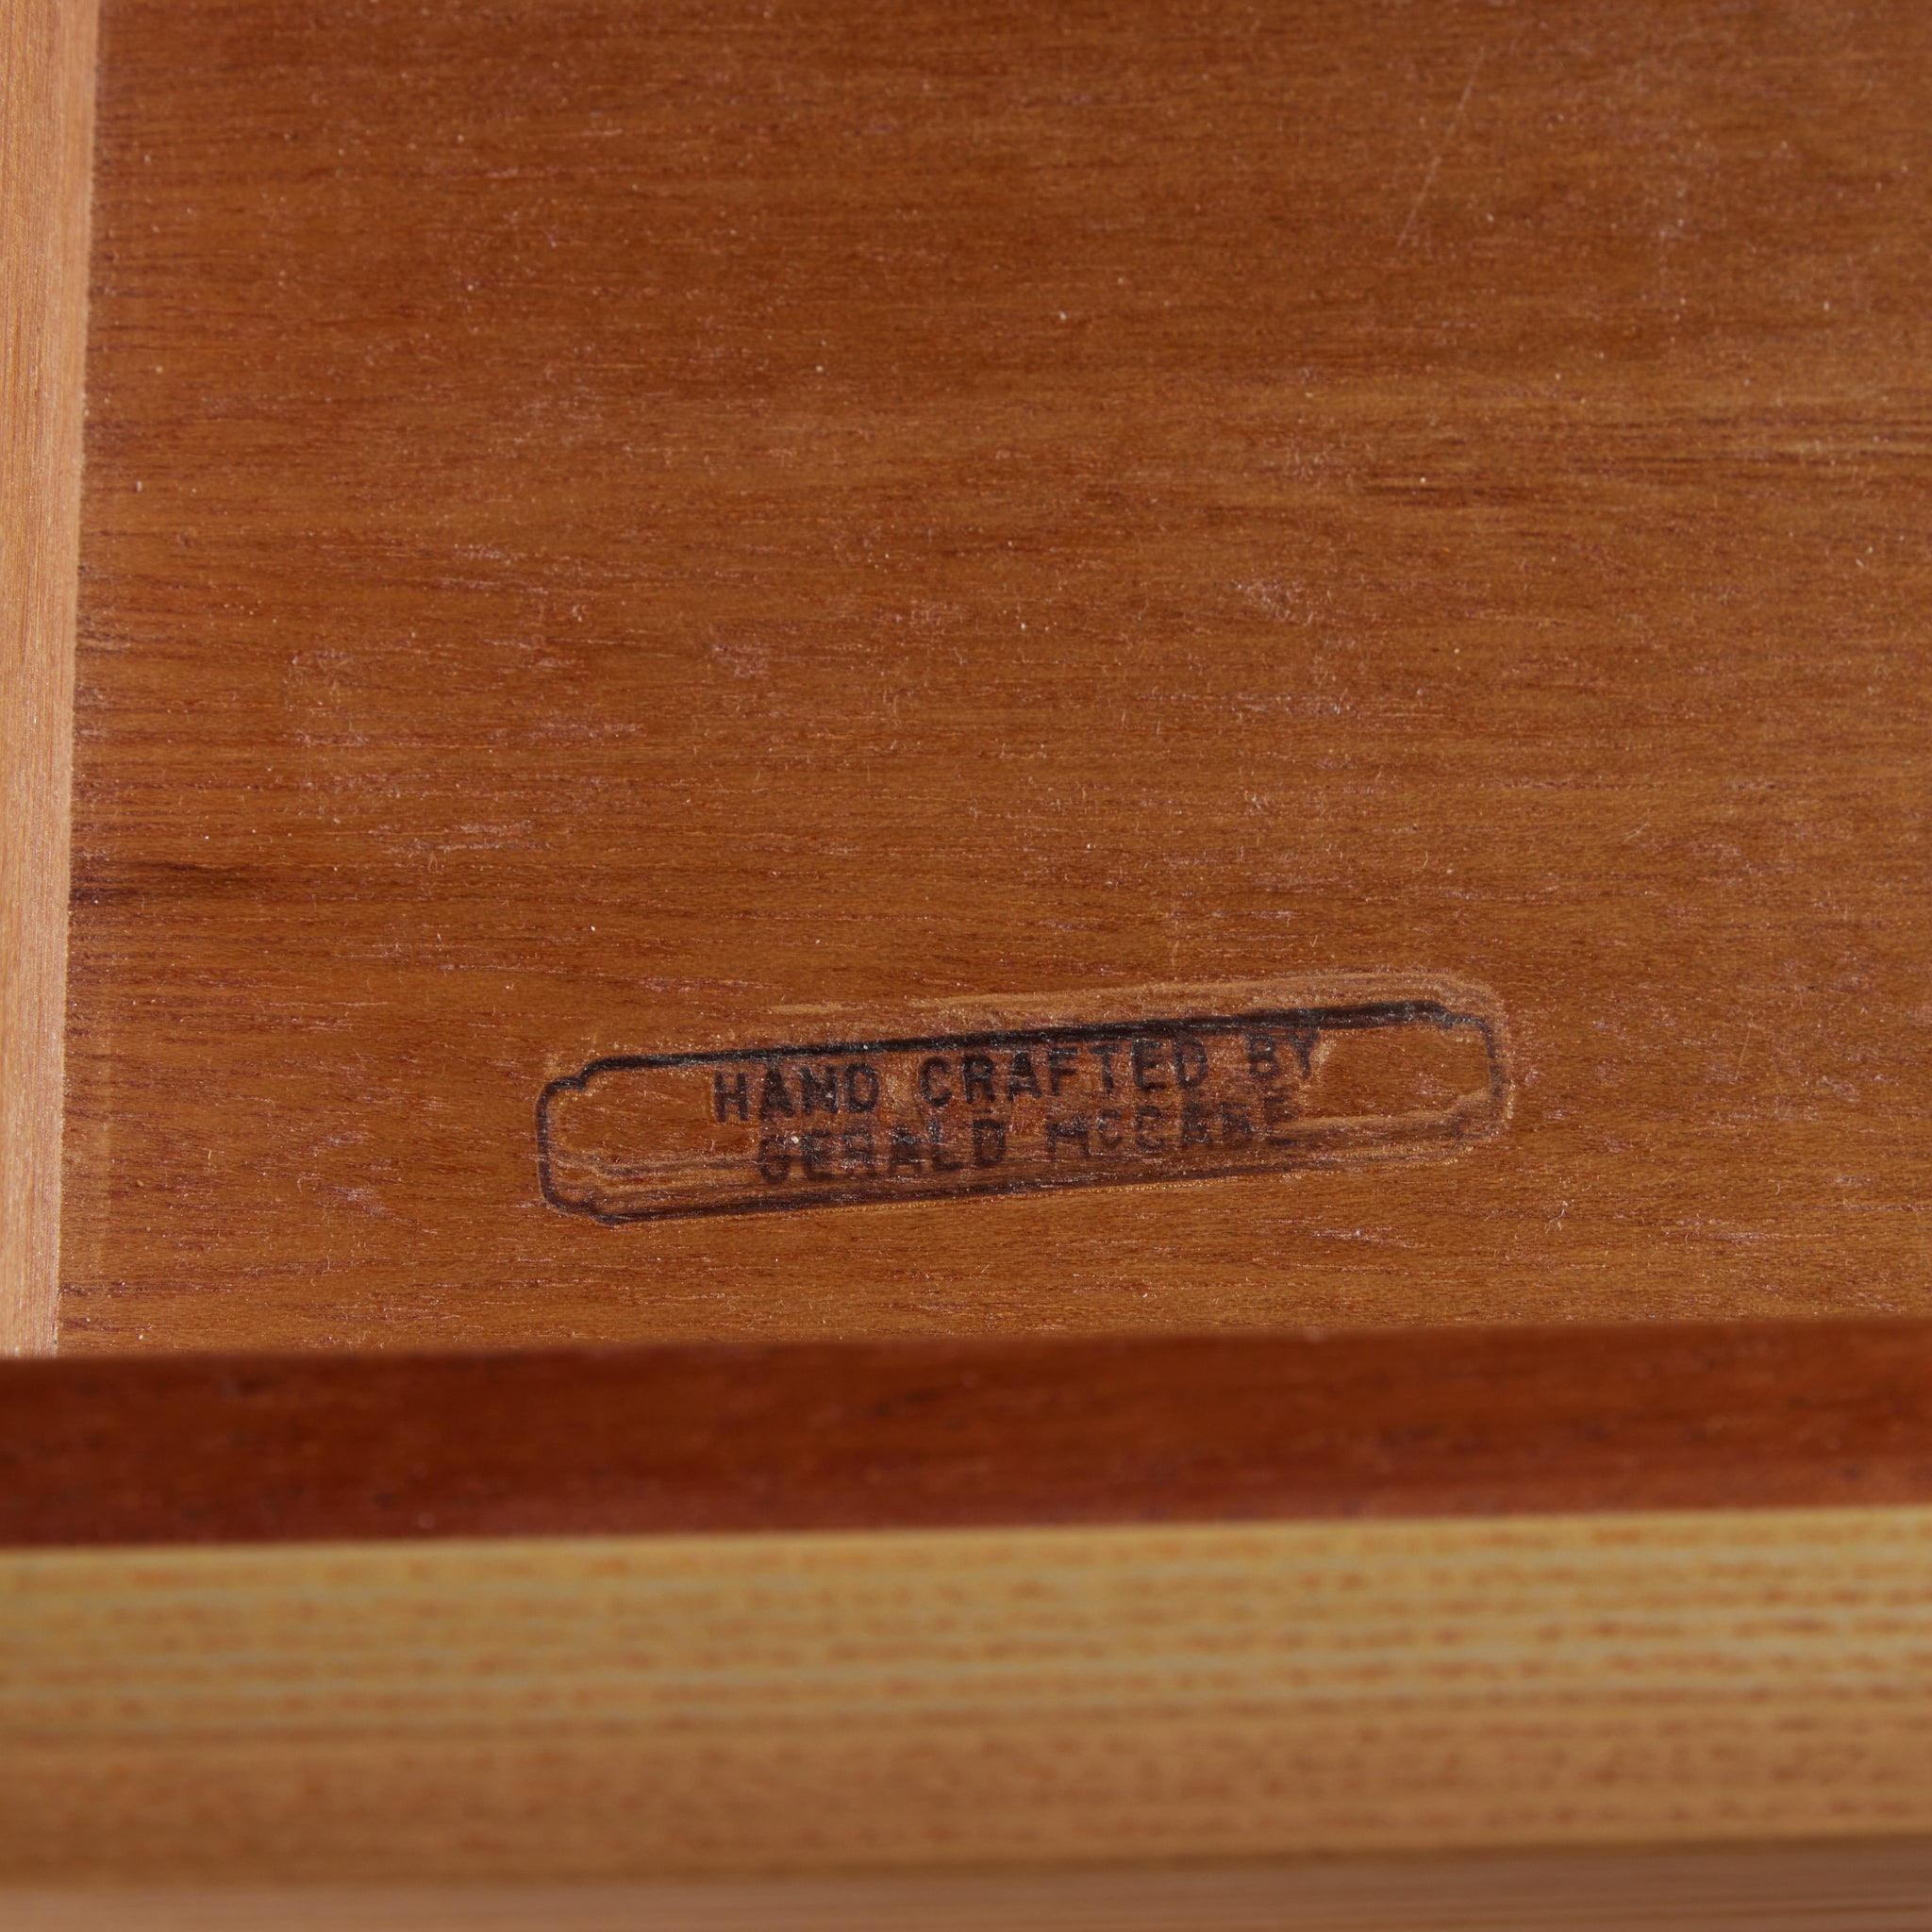 Gerald McCabe High Boy Dresser for Eon Furniture